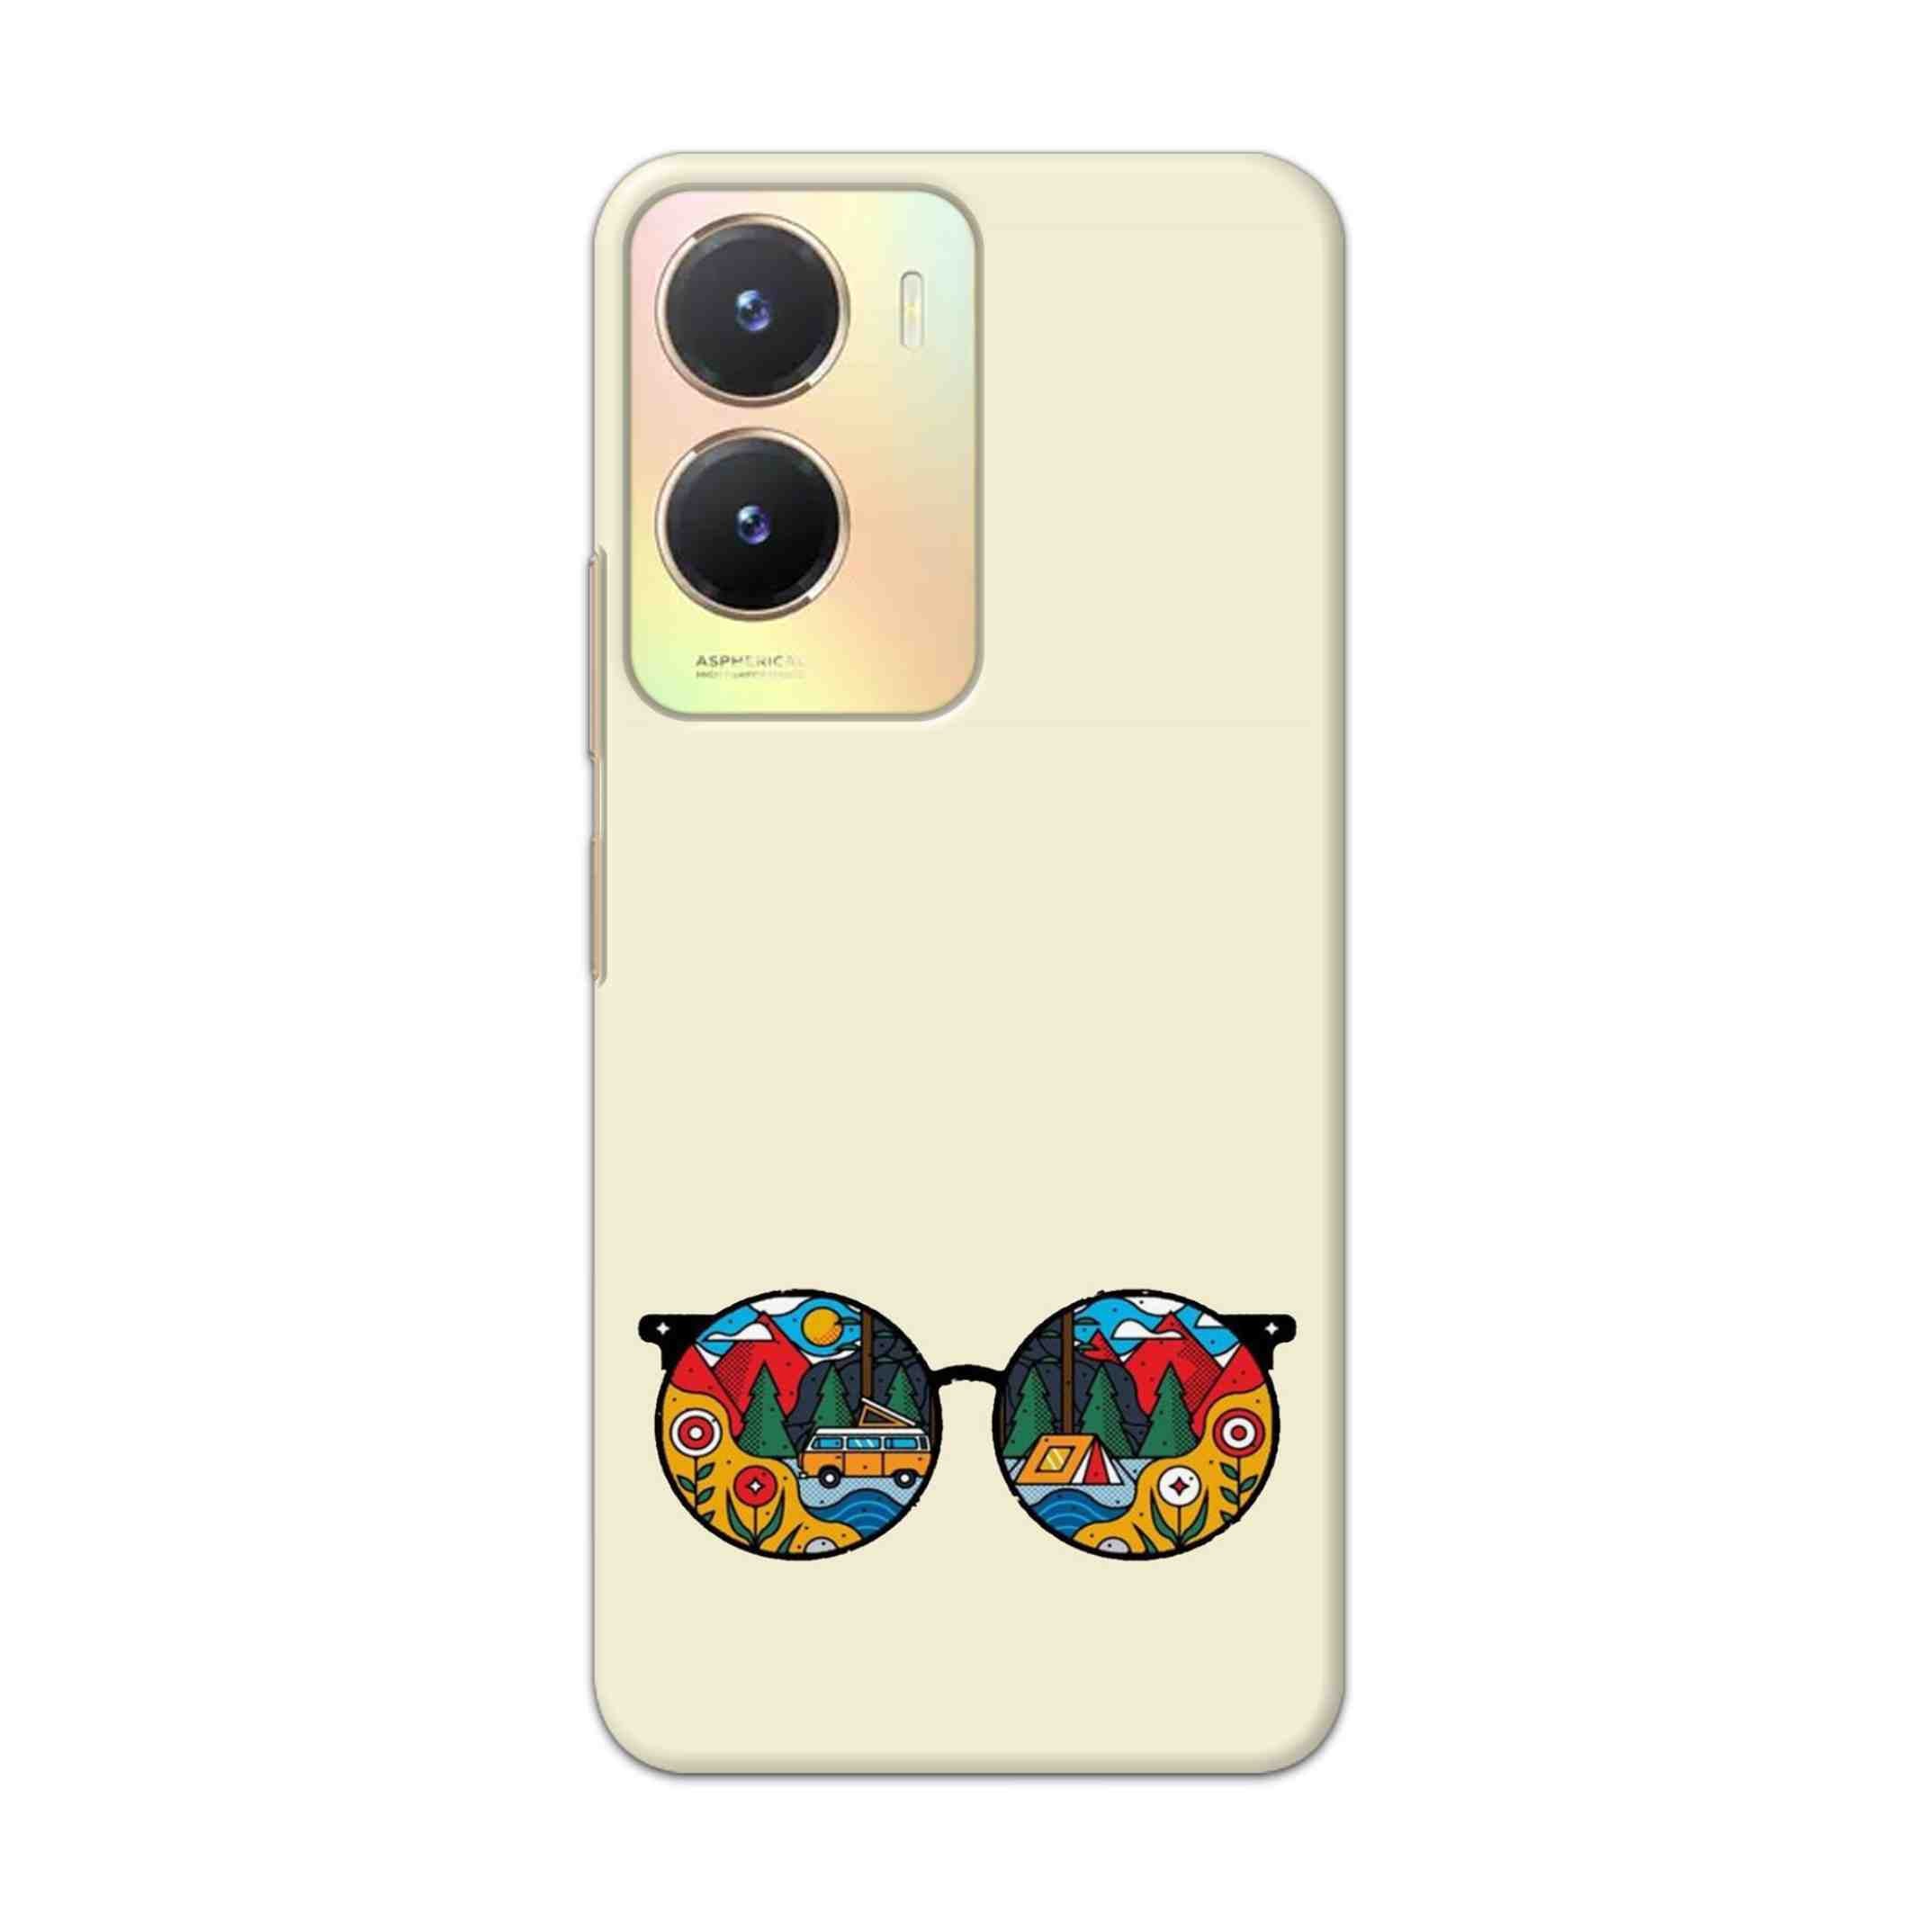 Buy Rainbow Sunglasses Hard Back Mobile Phone Case Cover For Vivo T2x Online